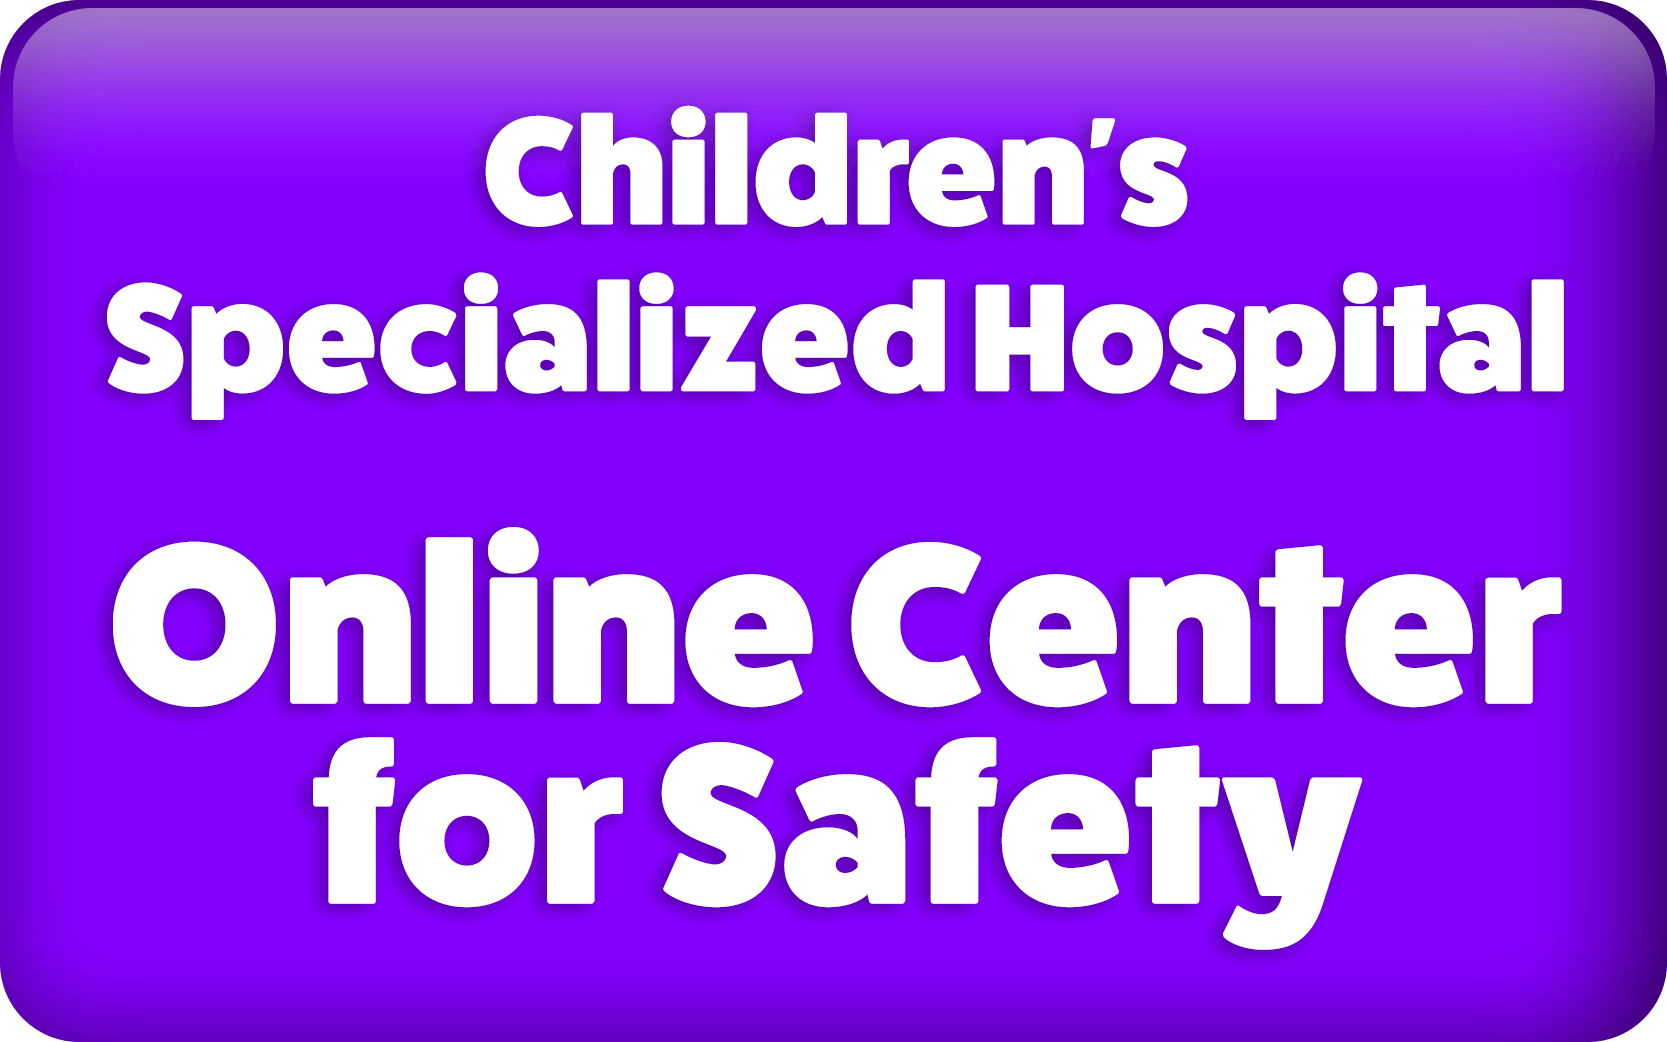 Children's Specialized Hospital Online Center for Safety